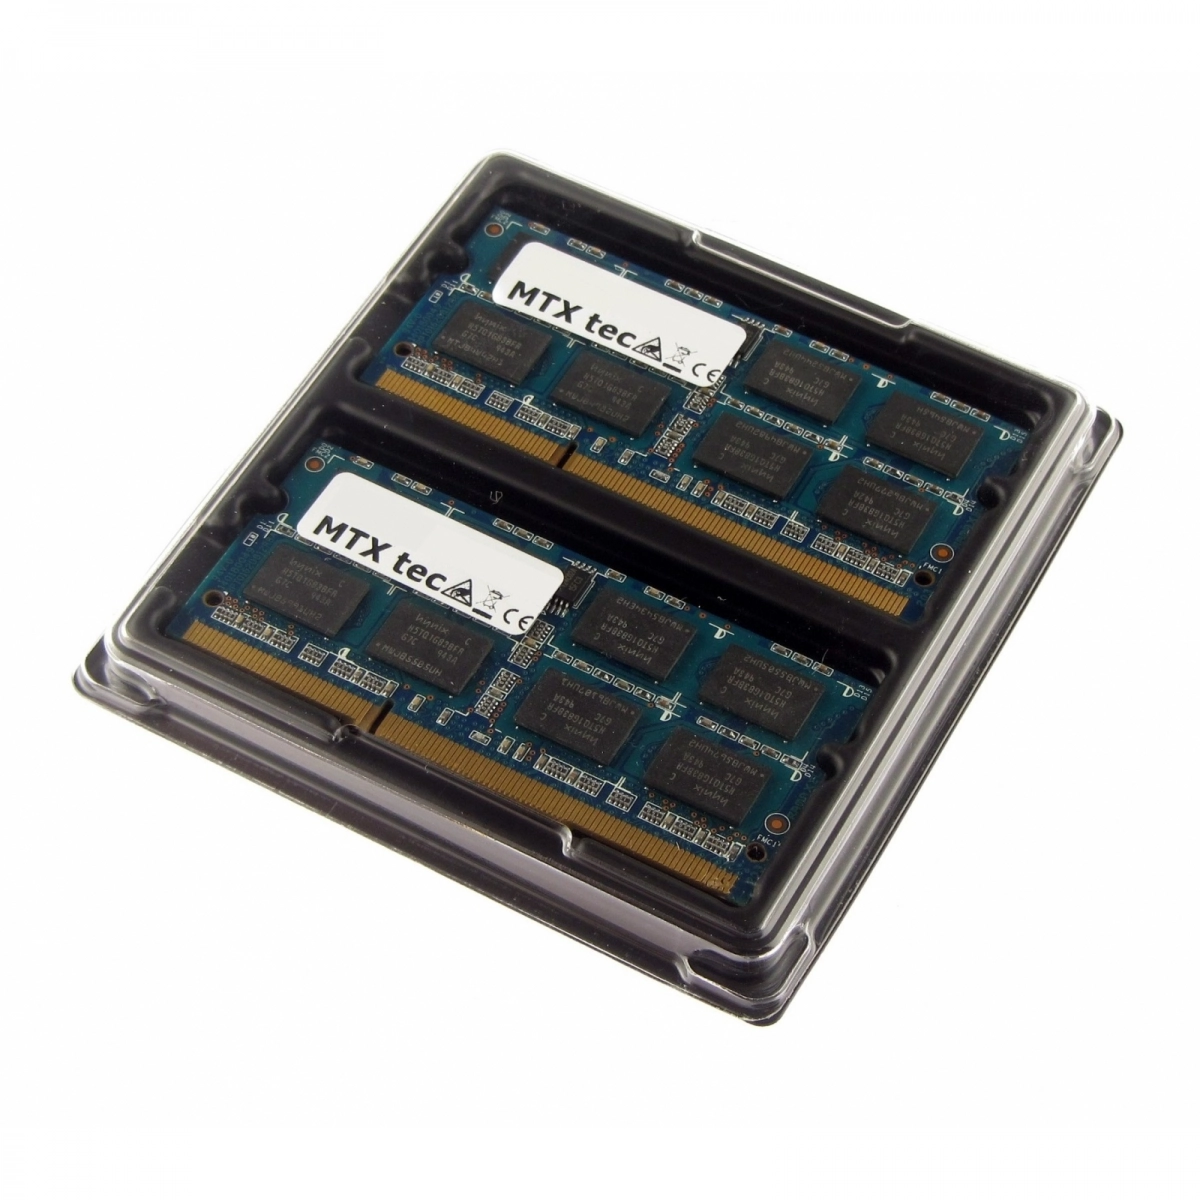 MTXtec 4GB Kit 2x 2GB DDR2 800MHz SODIMM DDR2 PC2-6400, 200 Pin RAM Laptop-Speicher